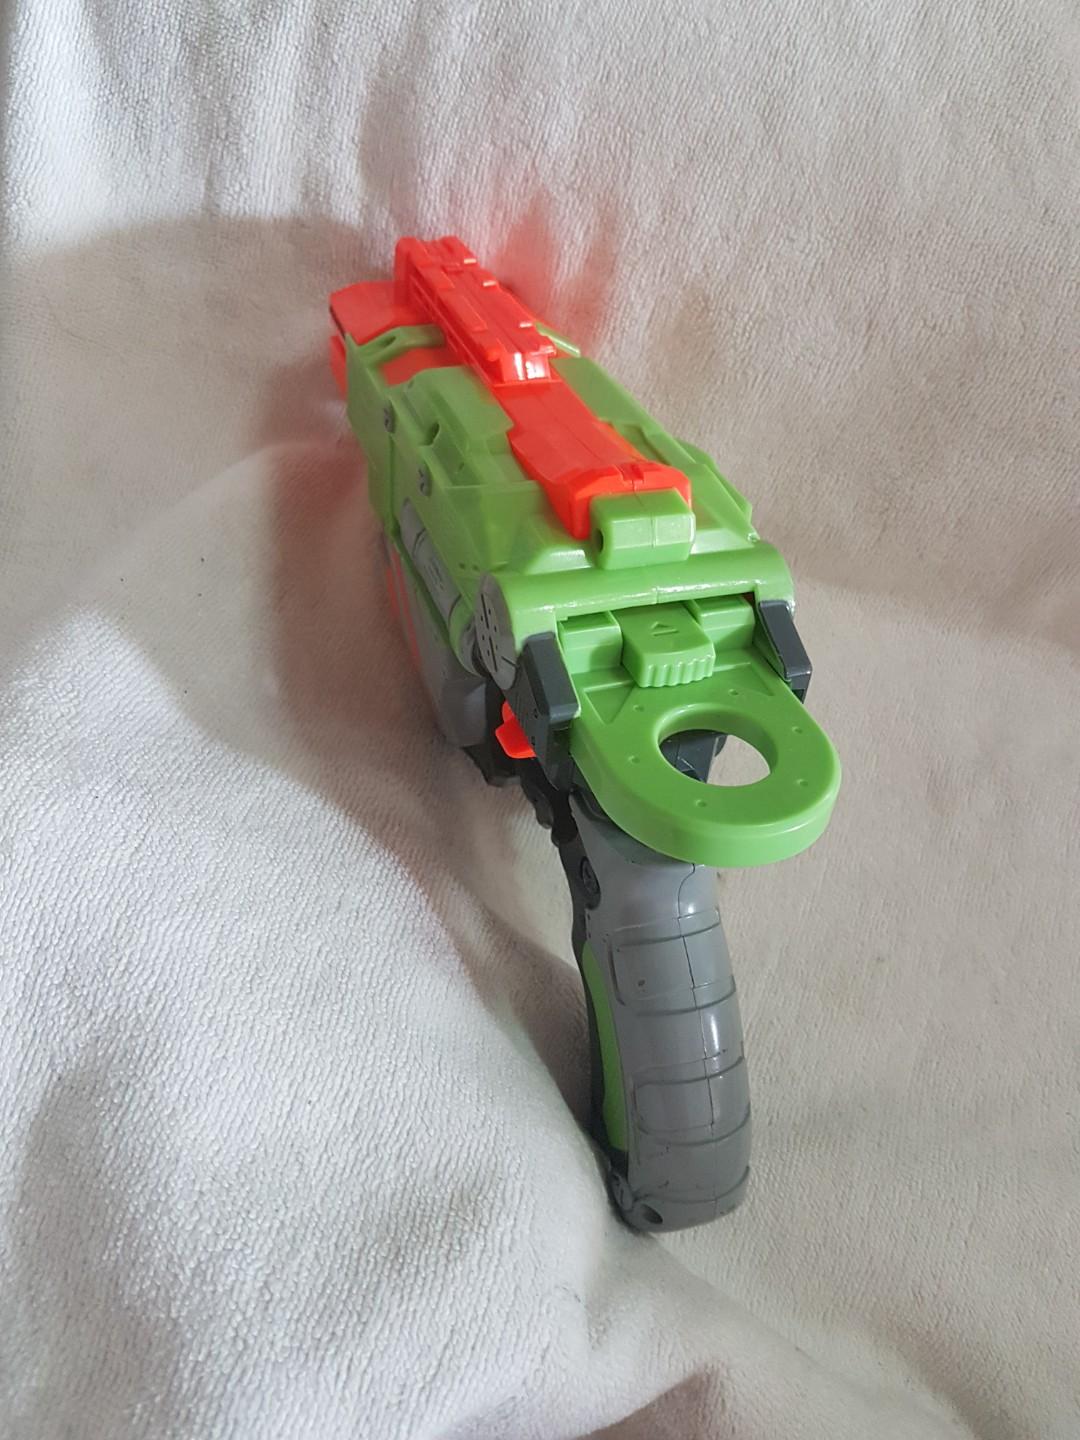 Nerf Vortex Proton Disc Blaster Gun, Kids Present Gift